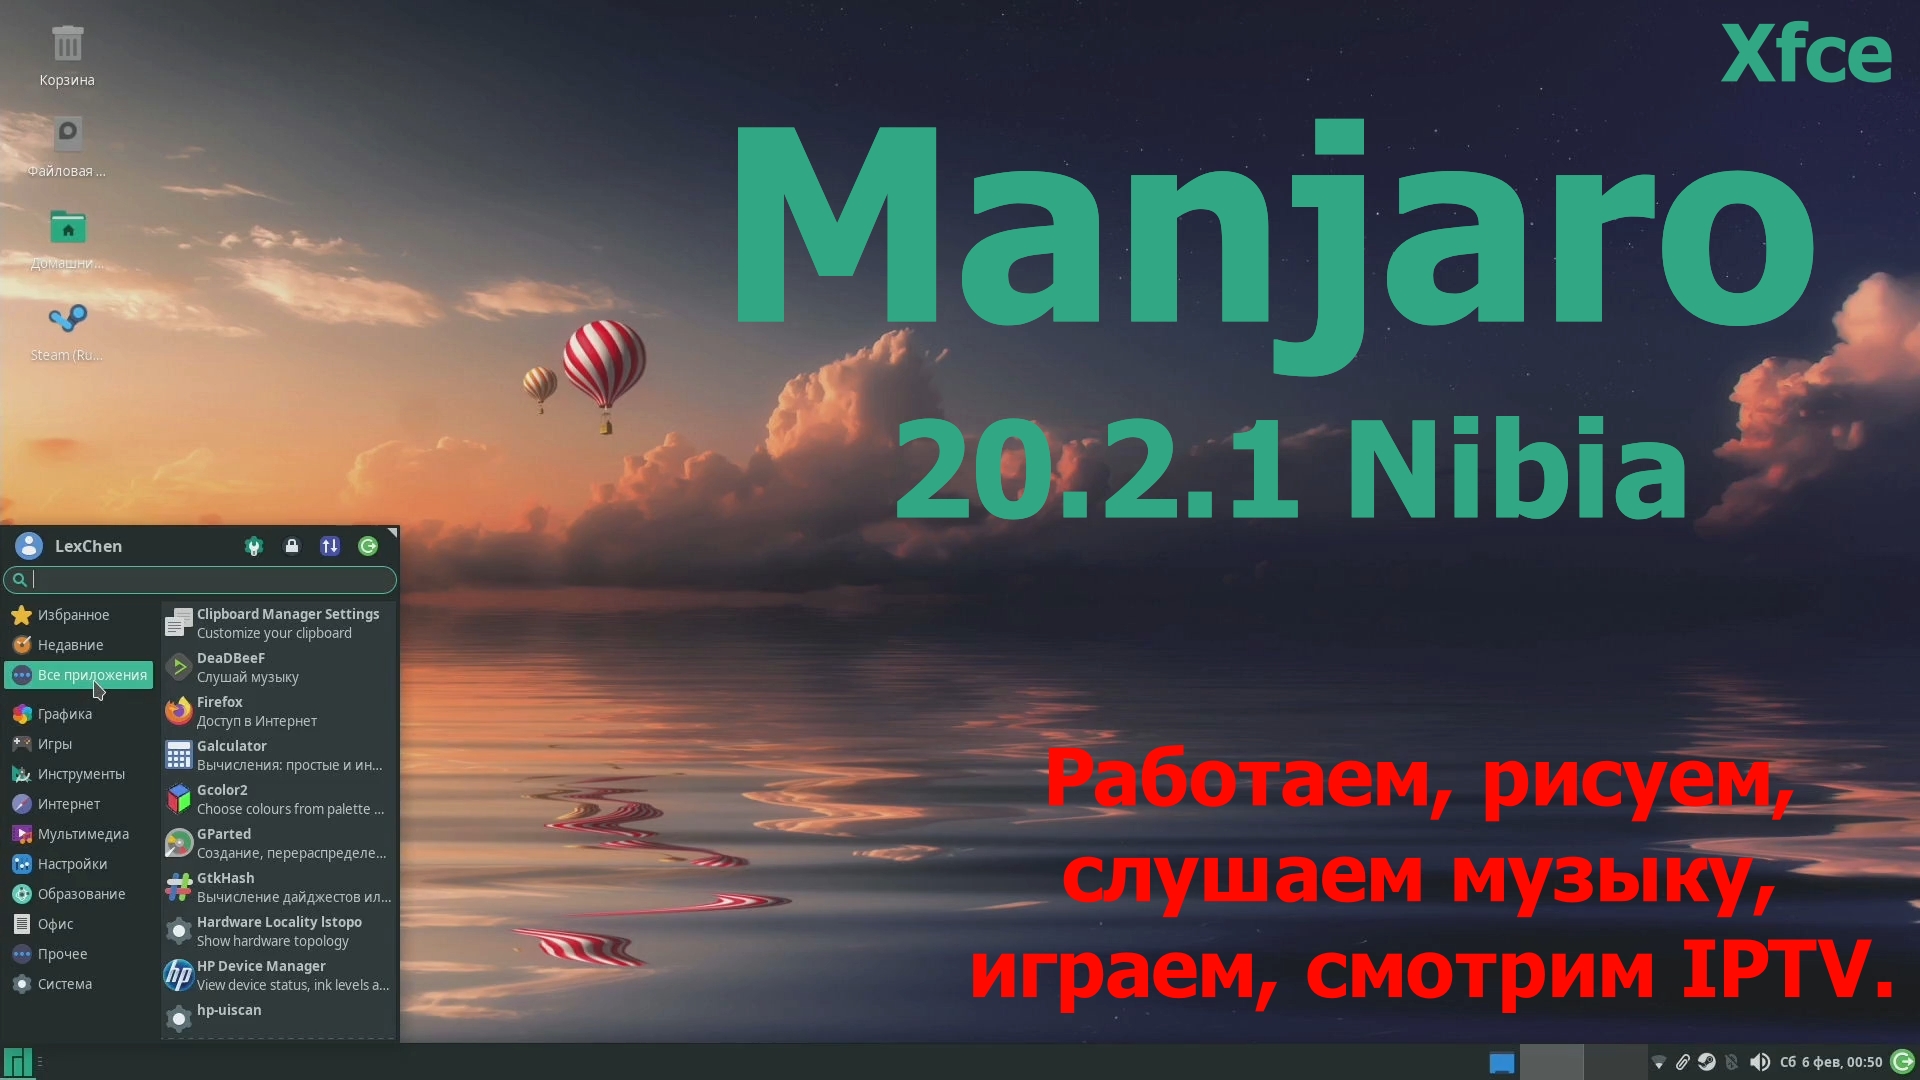 Дистрибутив Manjaro 20.2.1 Nibia (Xfce) (Установка и первоначальная настройка) (Февраль 2021)